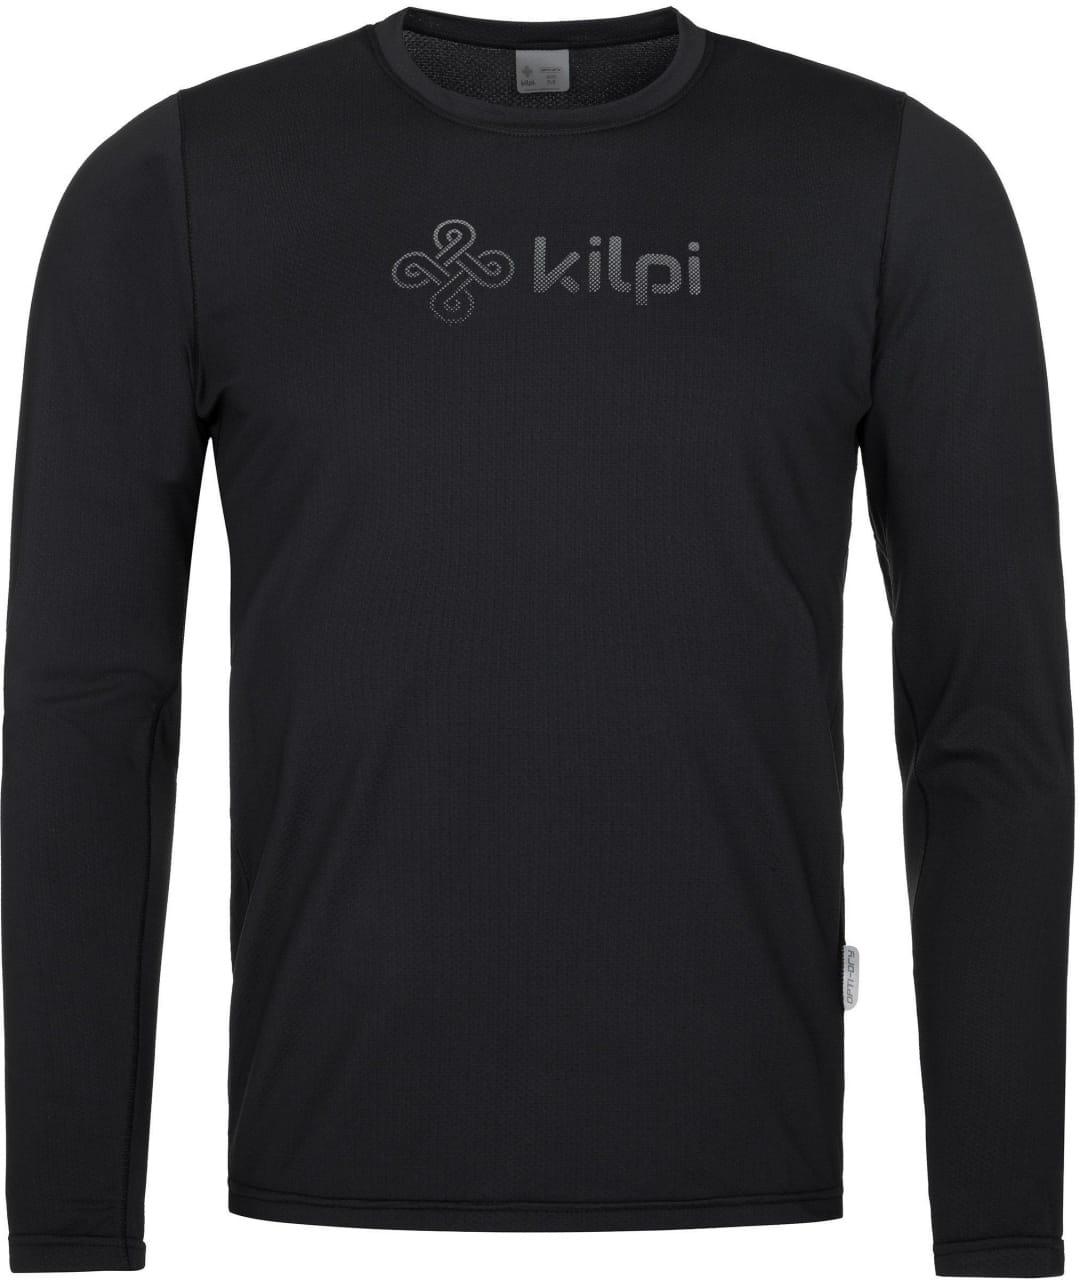 Funktions-T-Shirt für Männer Kilpi Spoleto